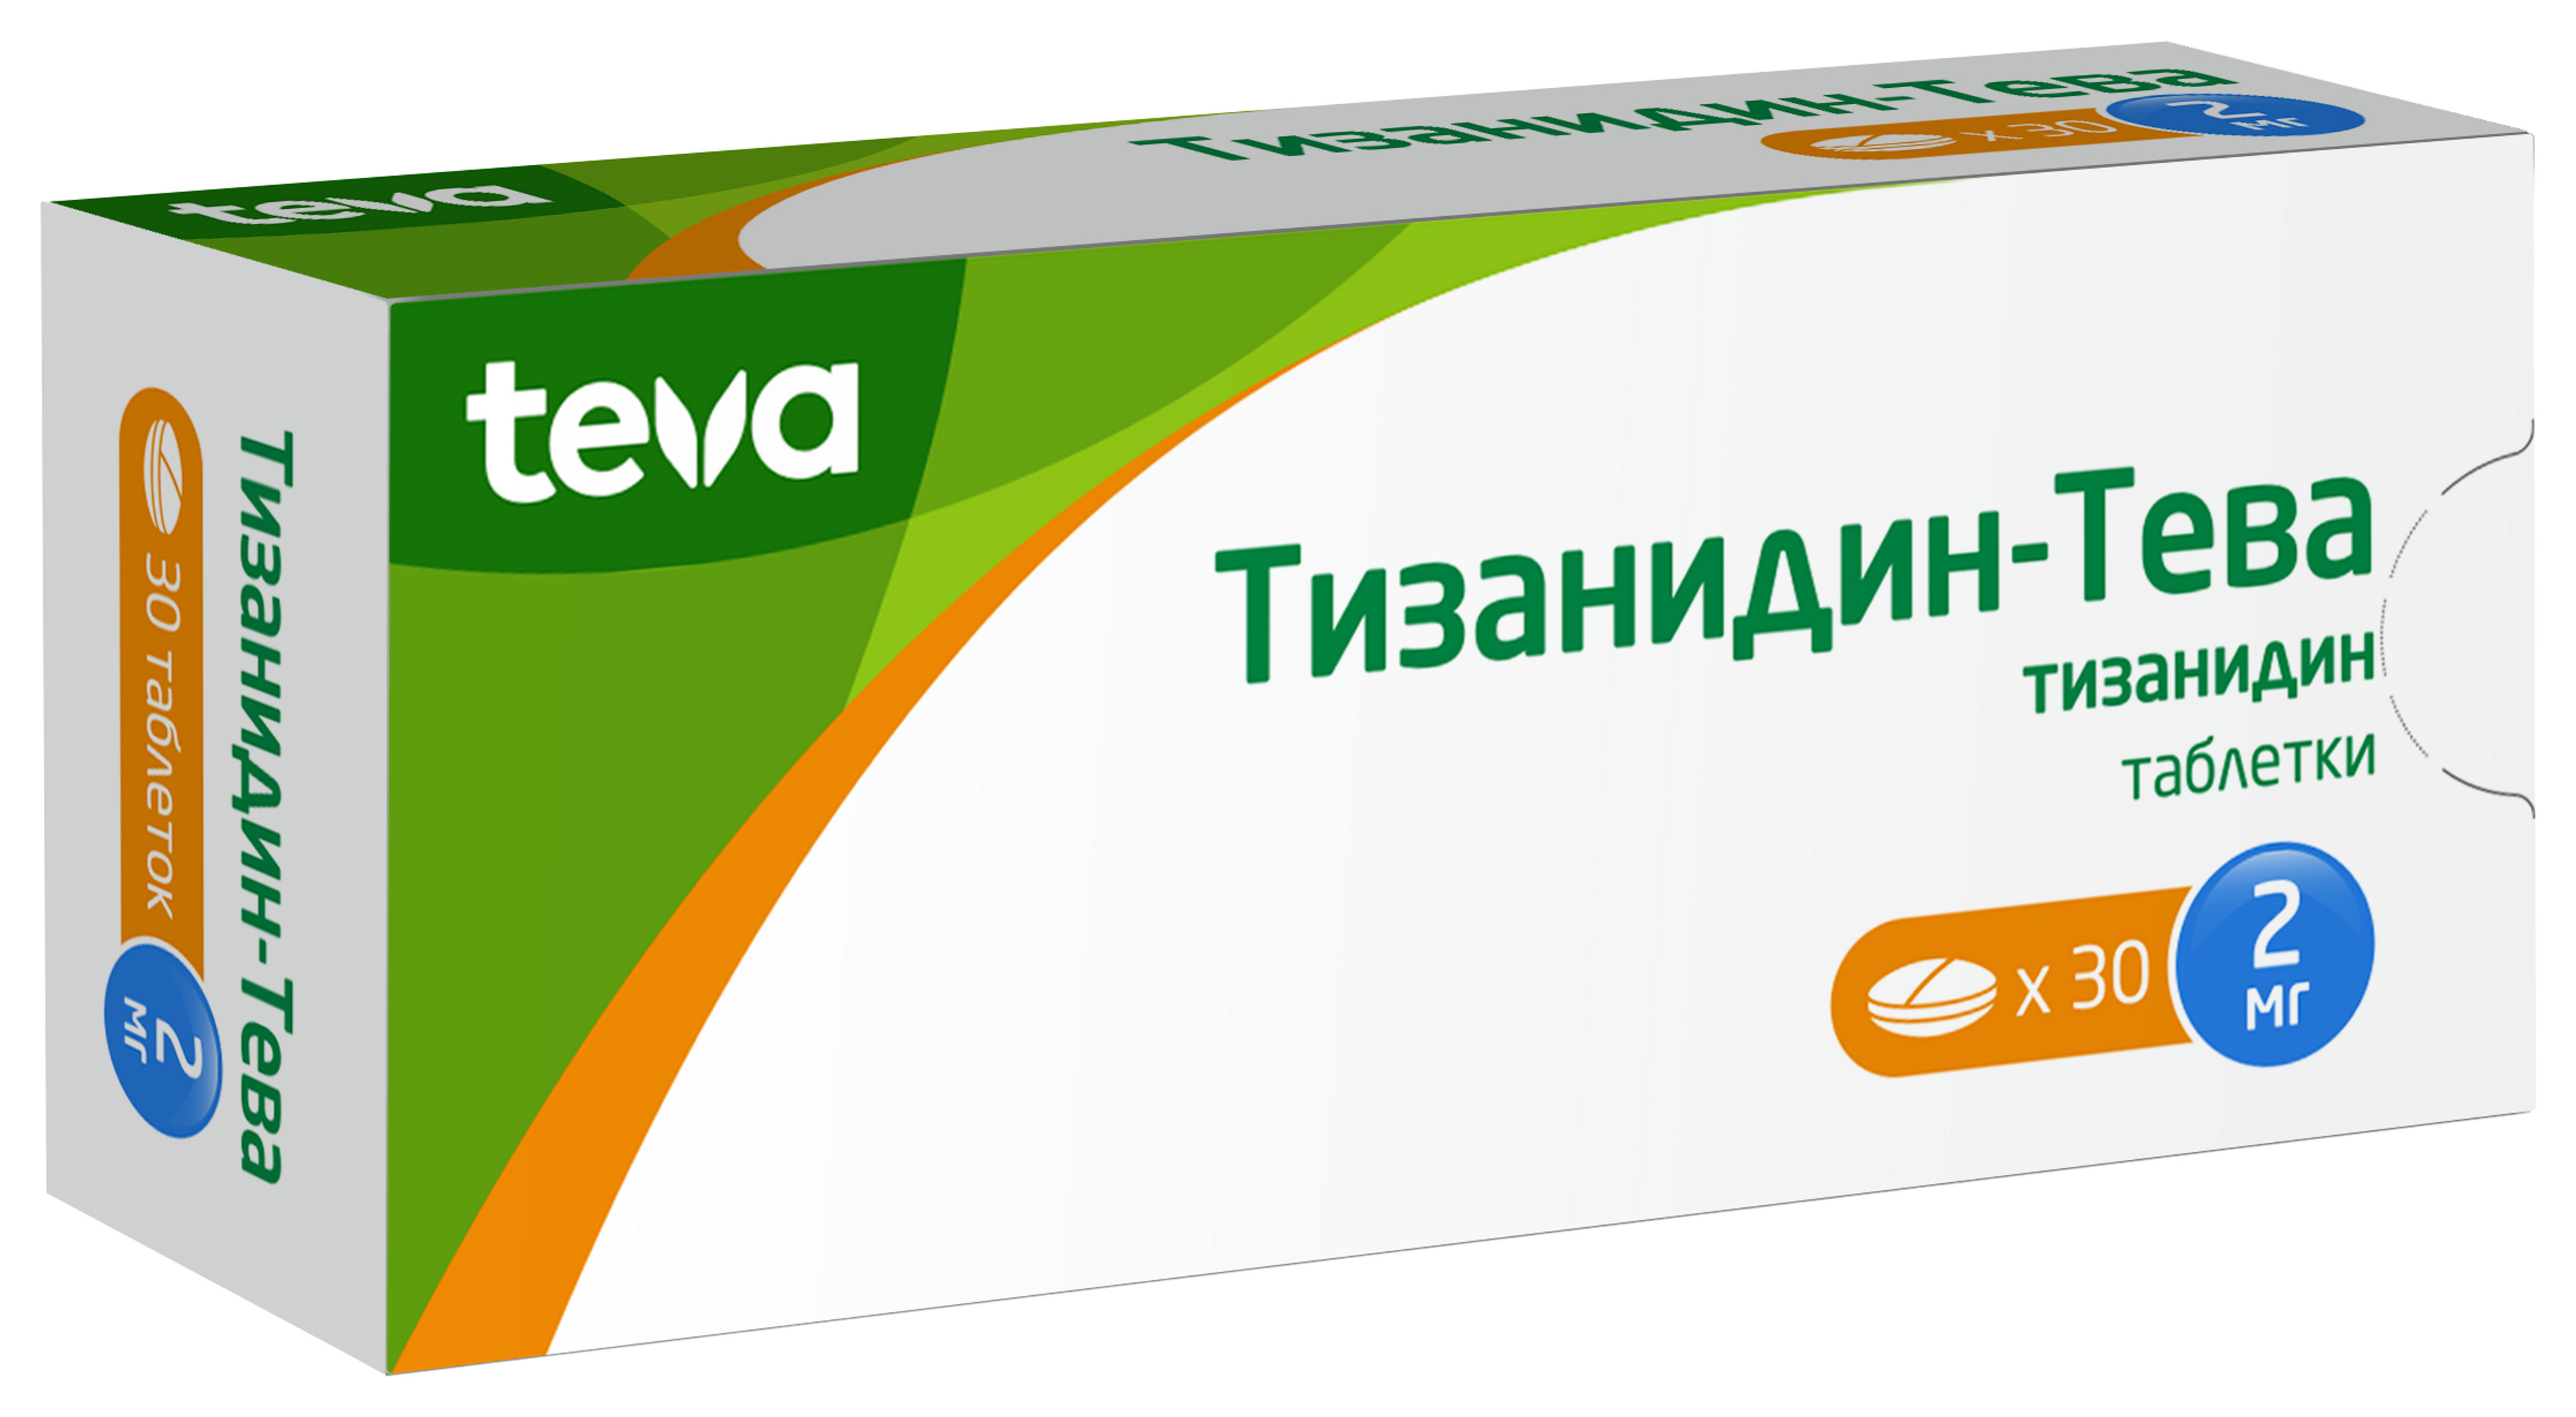 Тизанидин-Тева Таблетки 2 мг 30 шт  по цене 155,0 руб в интернет .